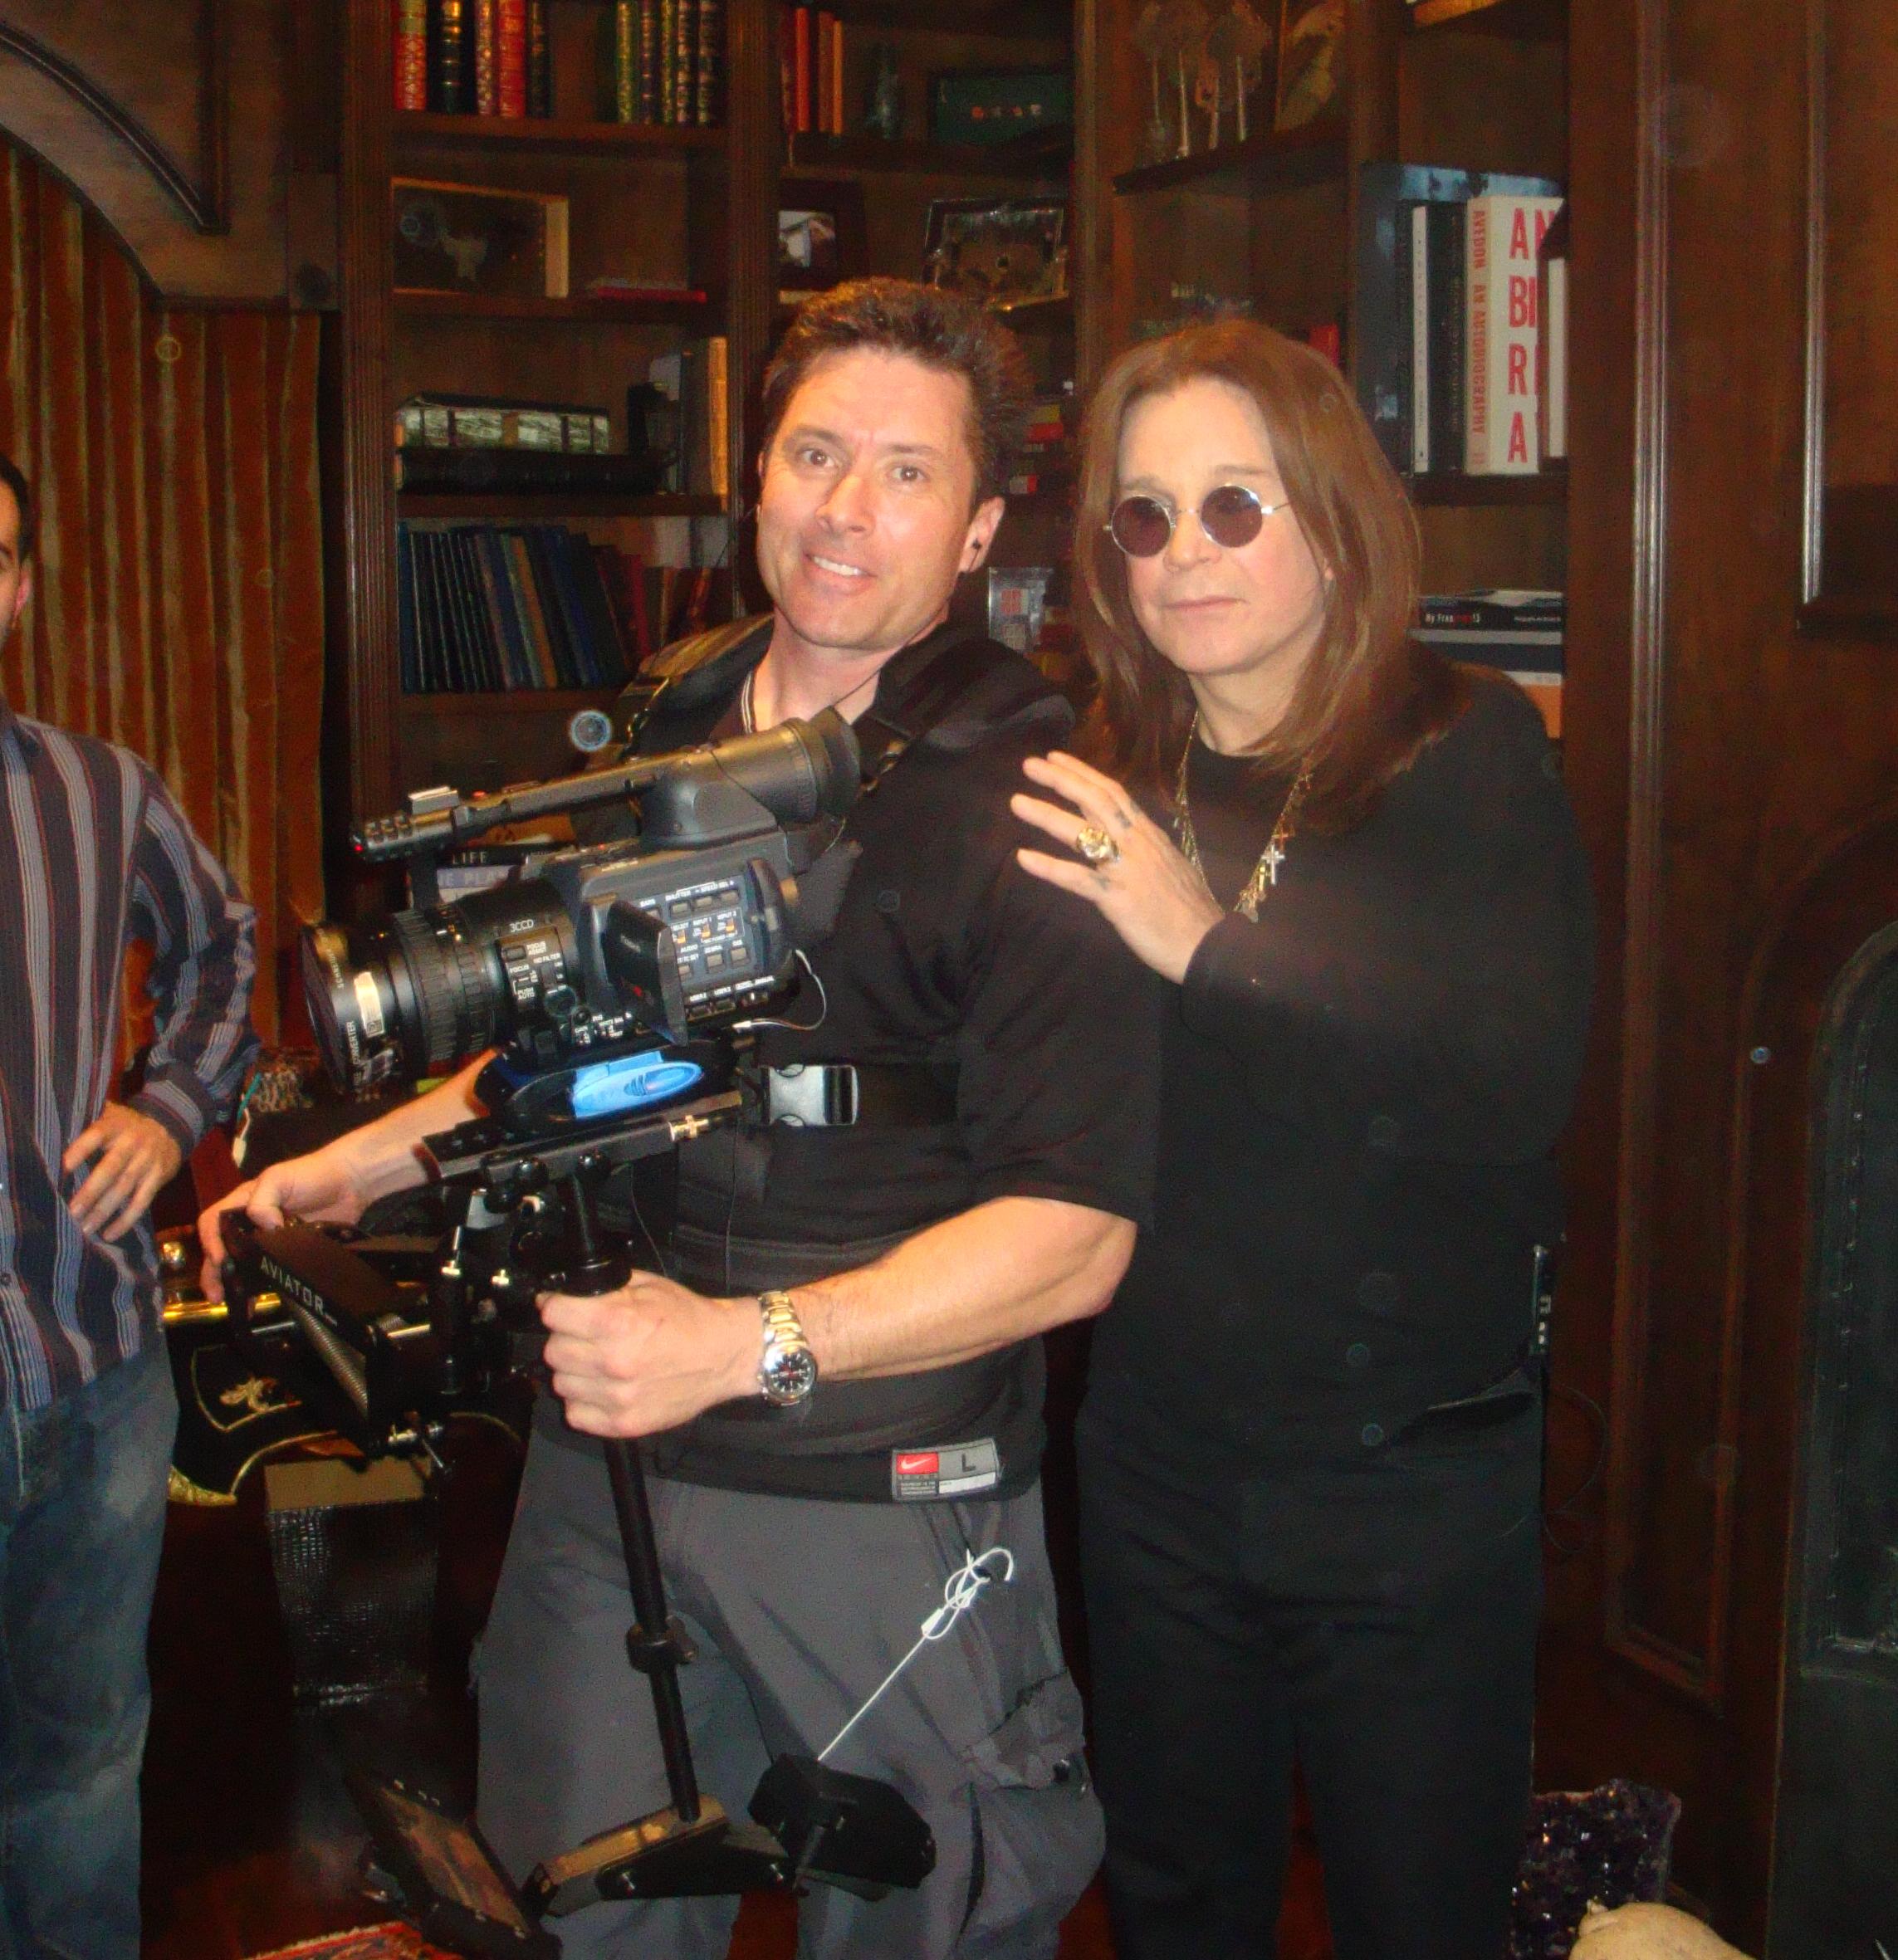 Hilaire Brosio and Ozzy Osbourne on the Randy Rhoads documentary shoot.